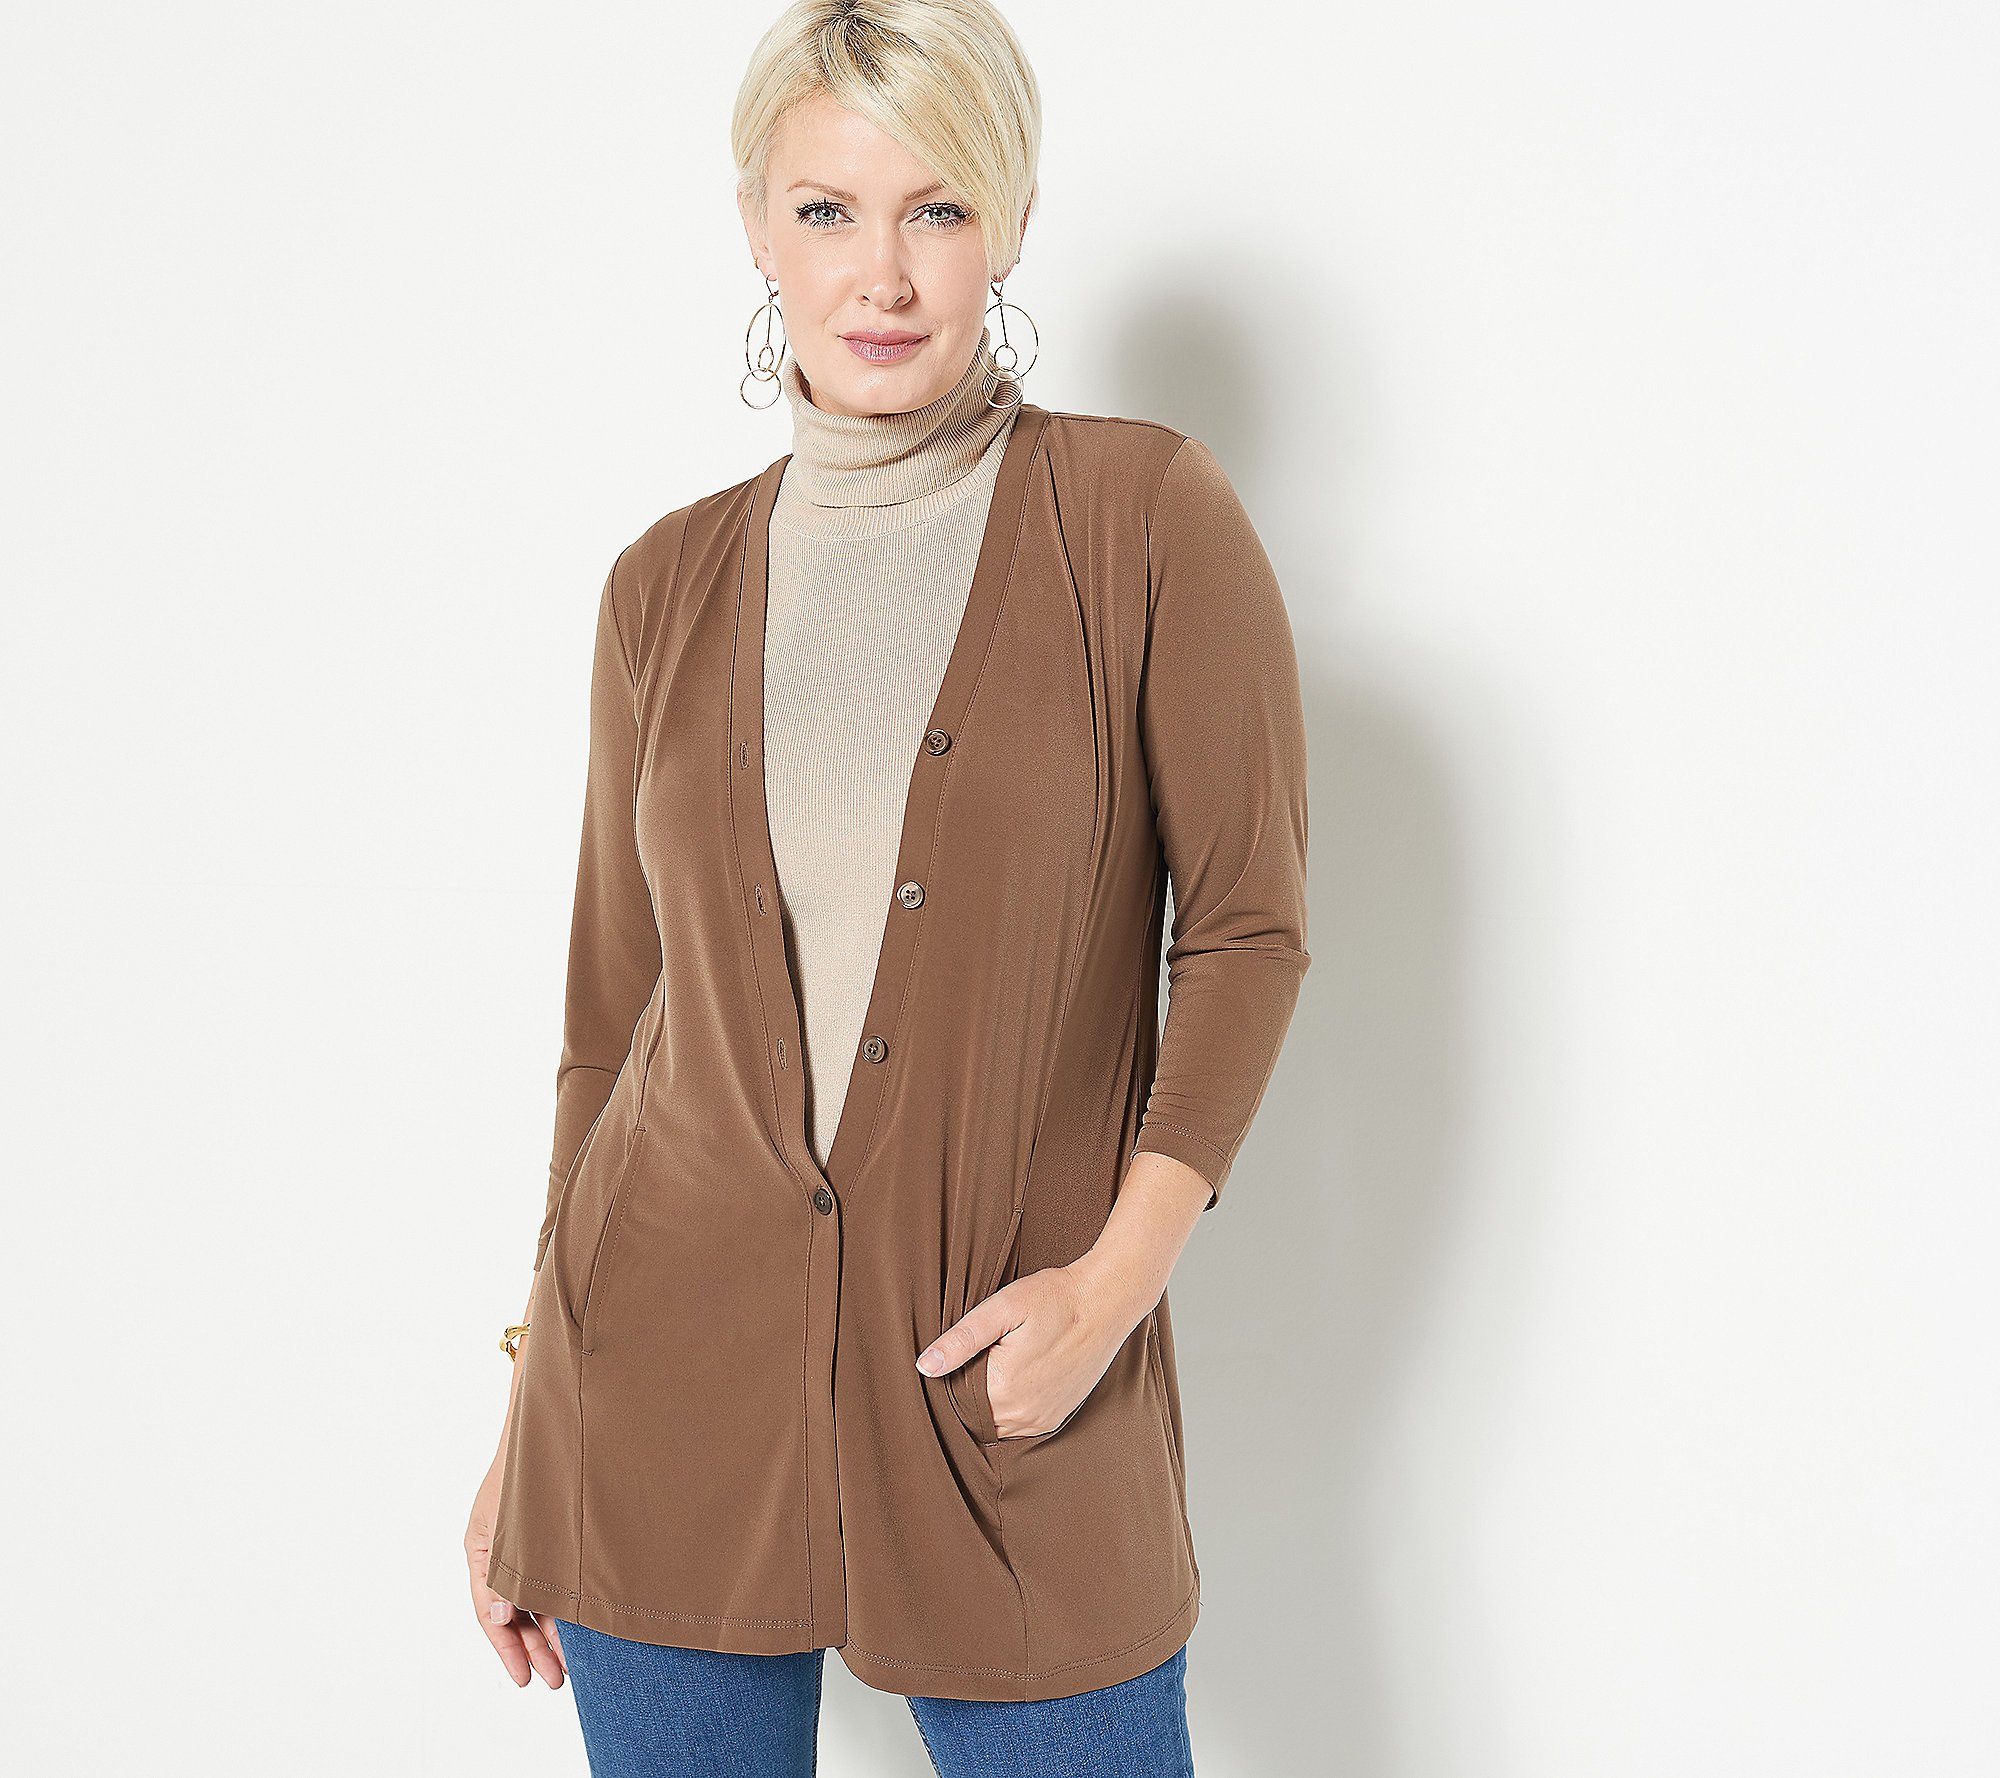 TOPUNDER Solid Open Front Cardigan Long Sleeve Blazer Casual Jacket Coat Women